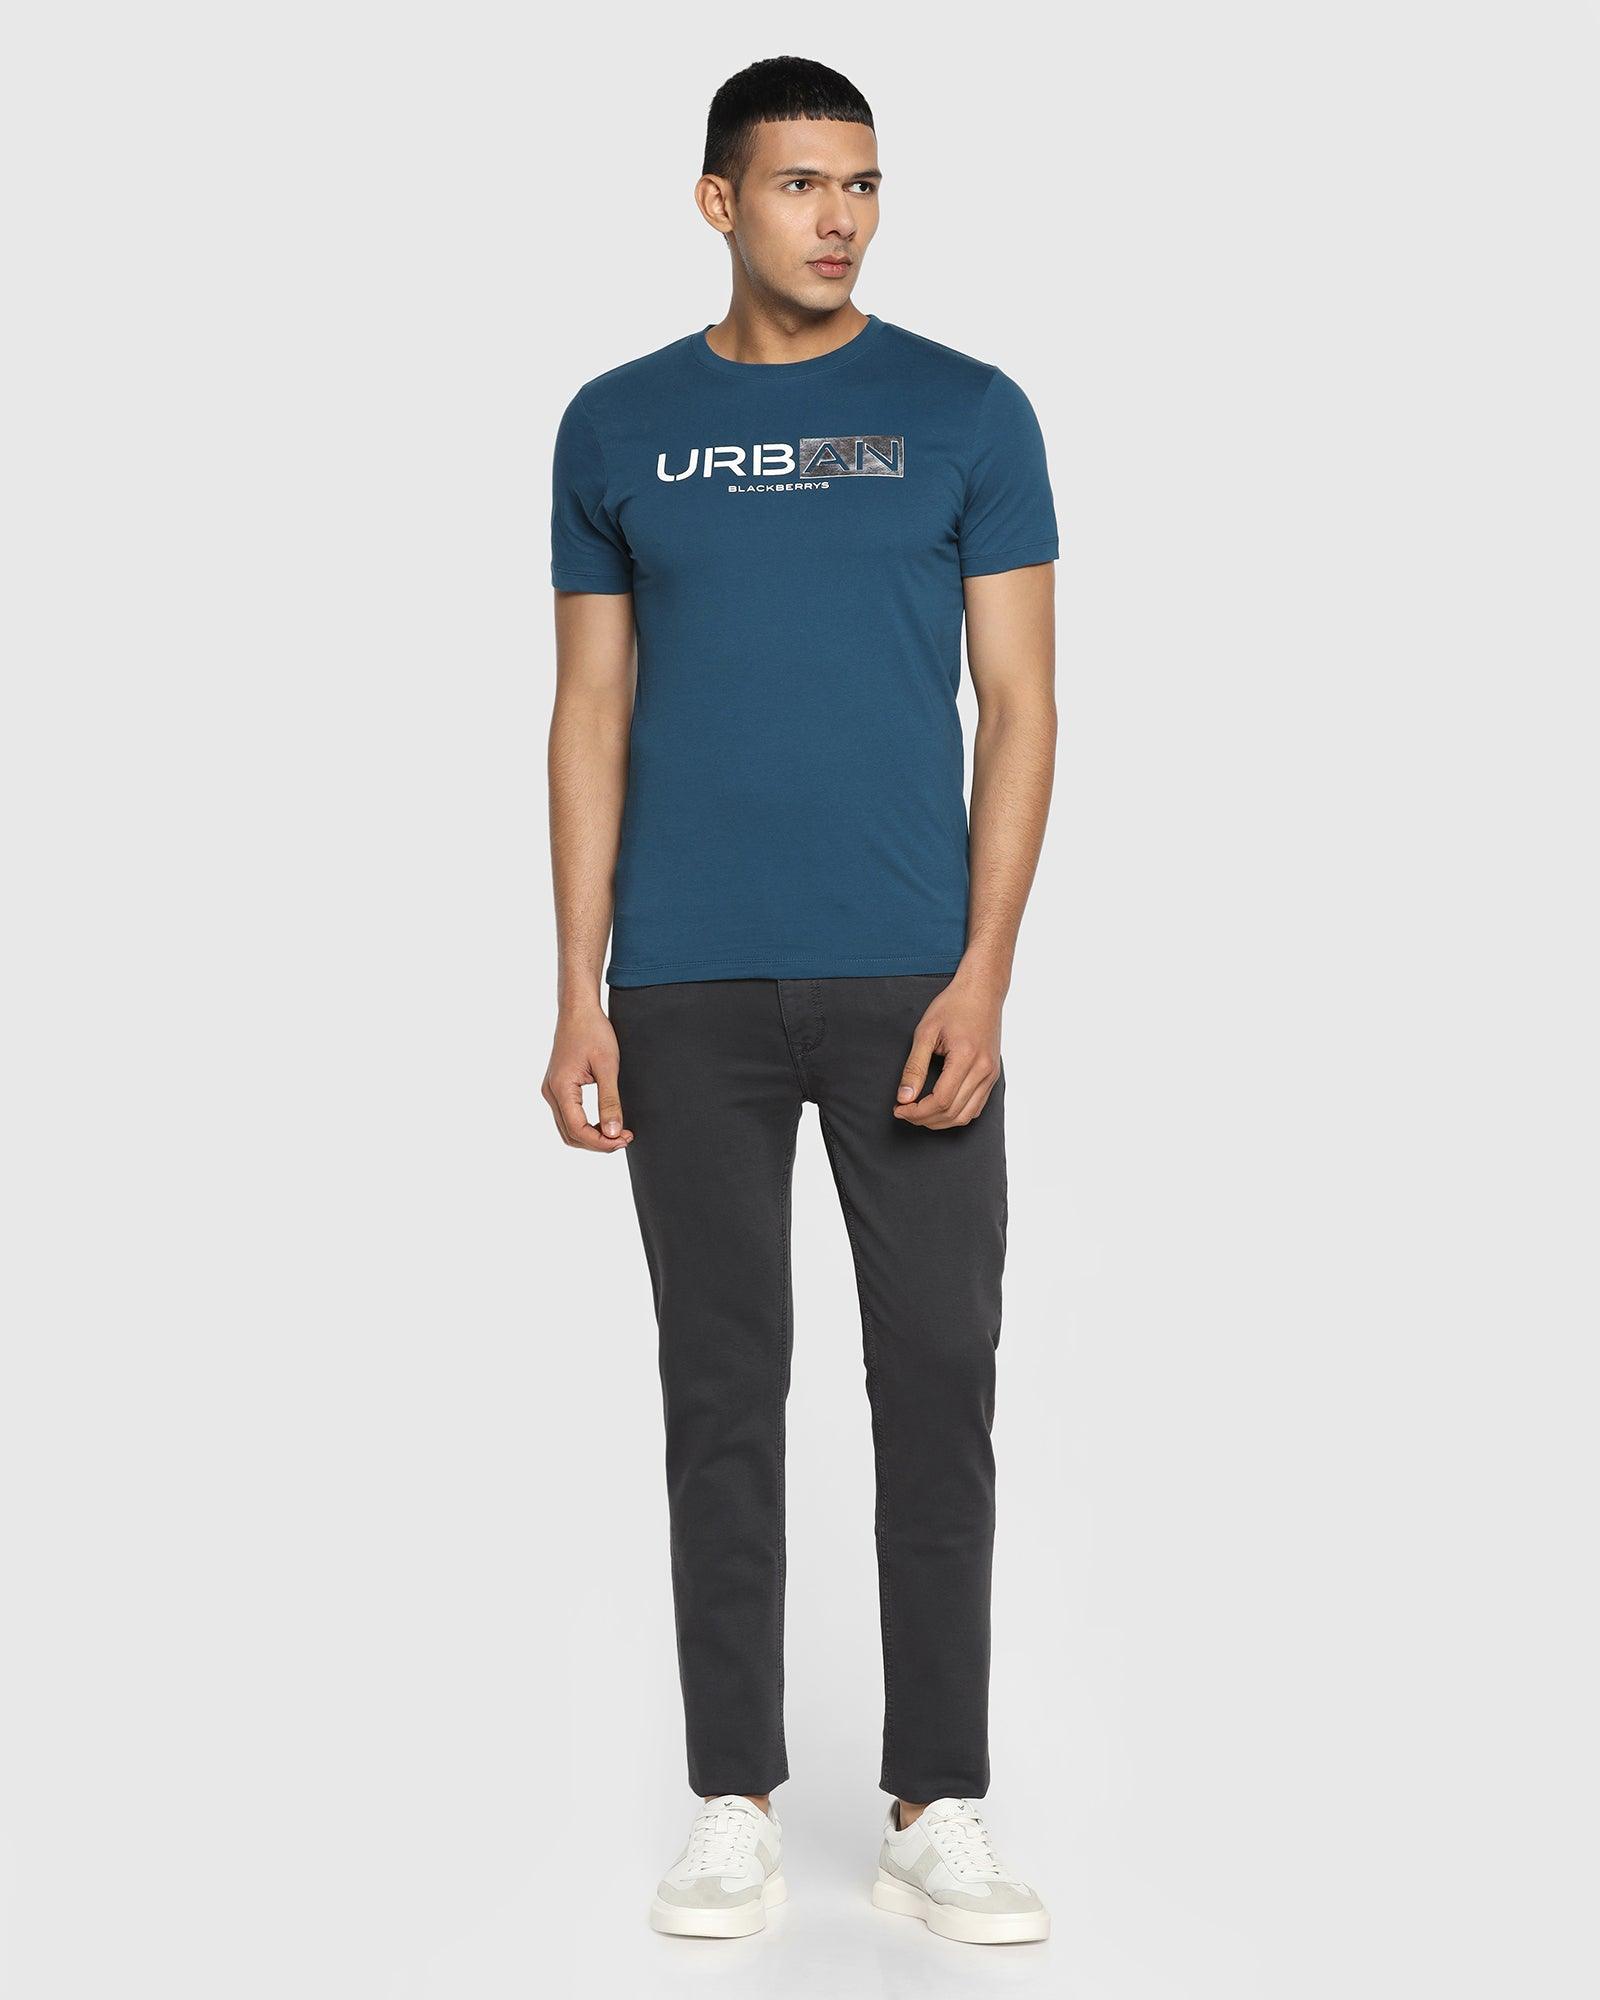 Crew Neck Teal Blue Printed T Shirt - Calvin